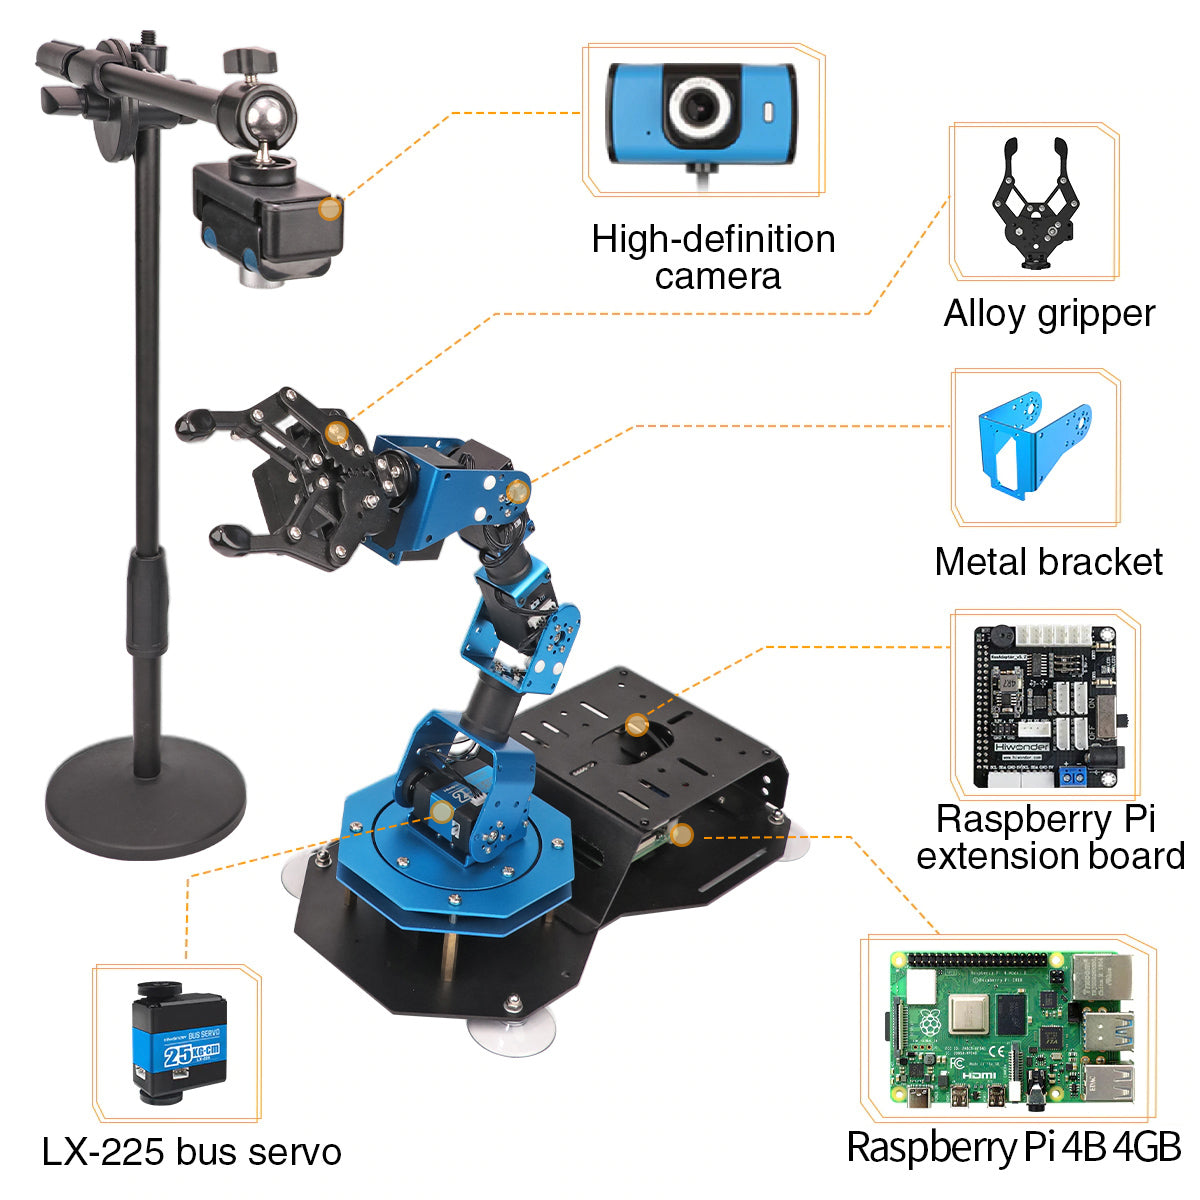 ArmPi Hiwonder Raspberry Pi 4B 4GB (Included) AI Vision Robotic Arm/ Python Program